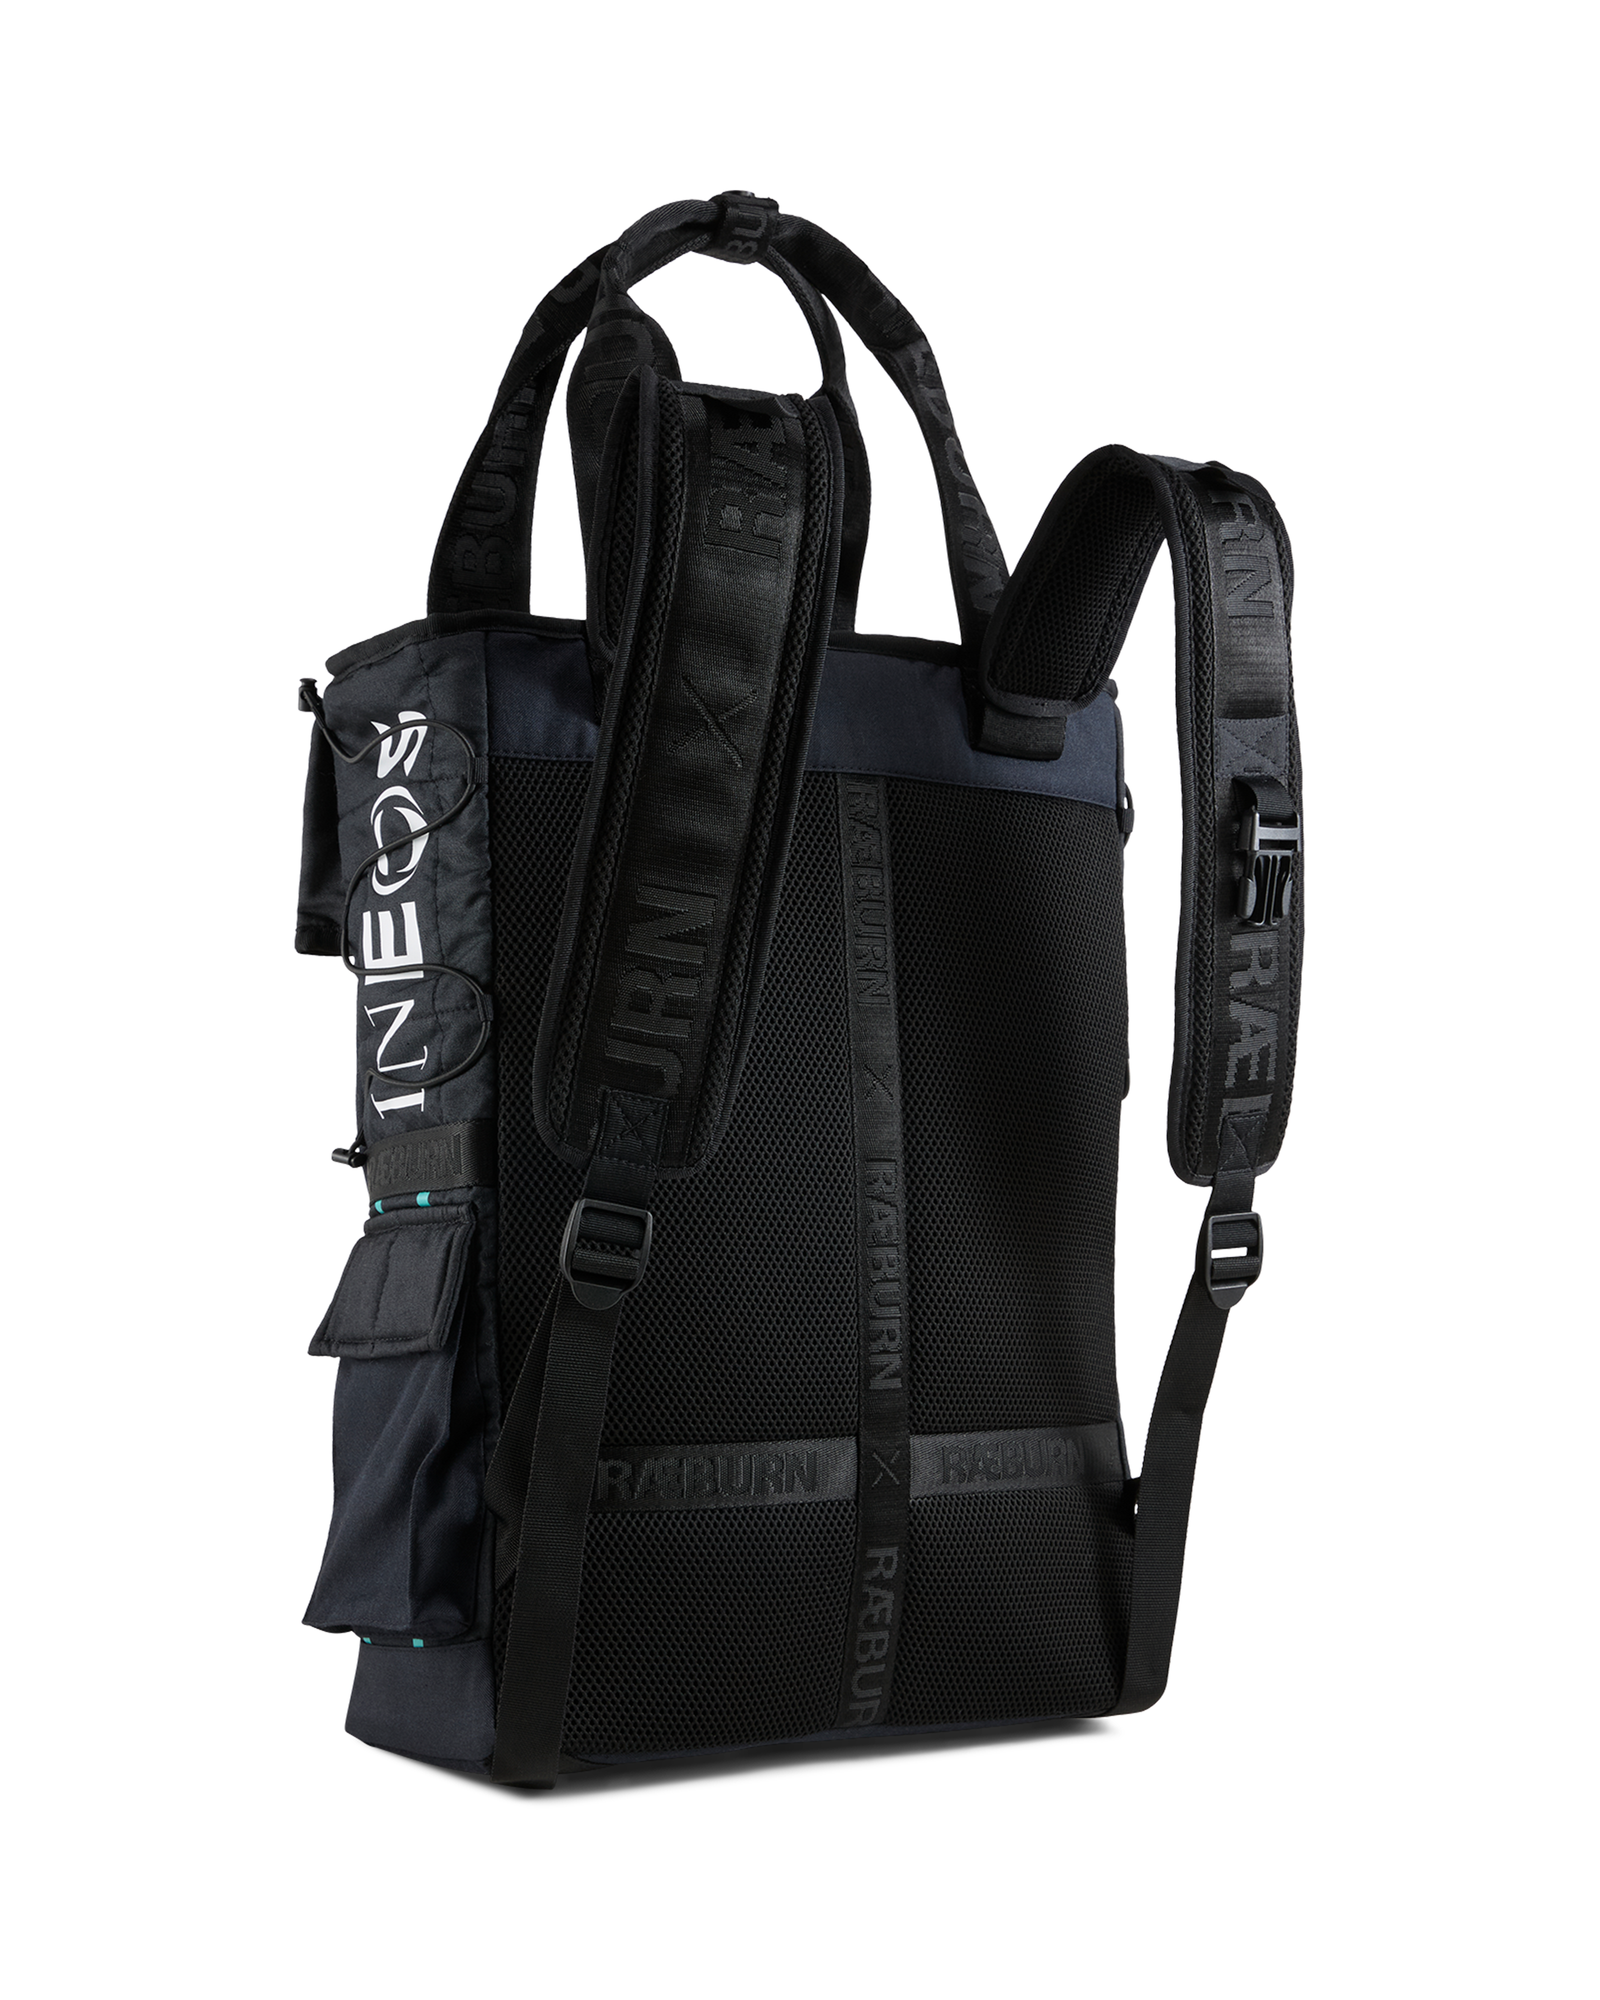 Raeburn x Mercedes-AMG F1 x Puma Masterpiece Backpack